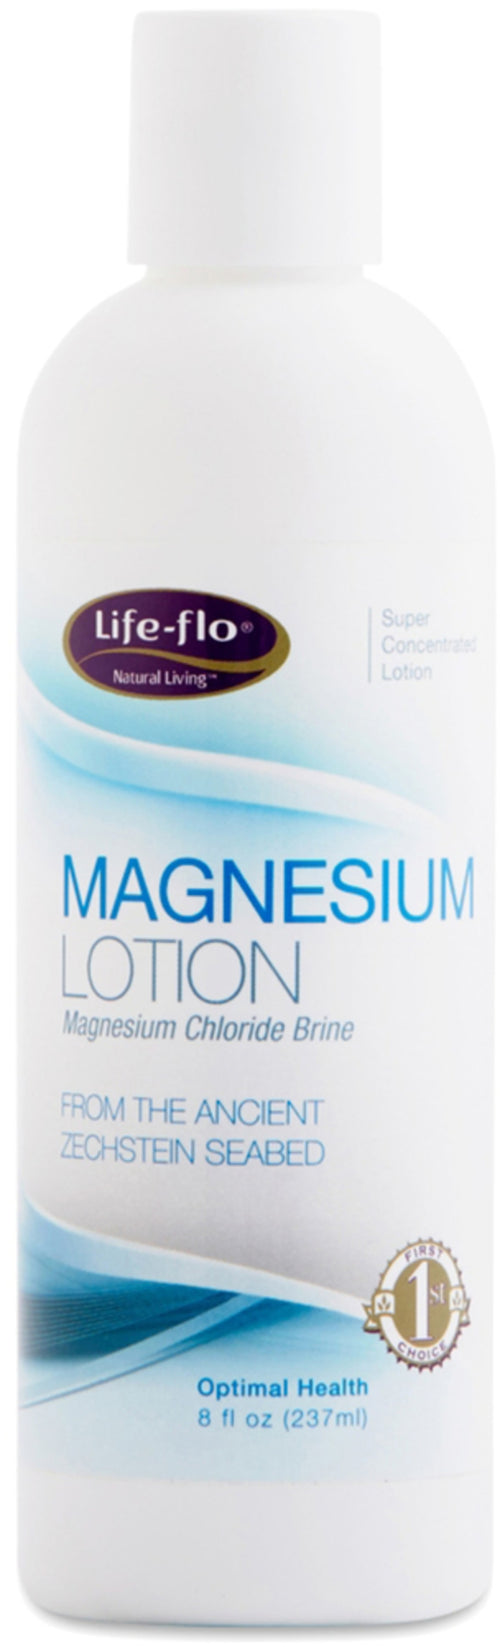 Magnesium Lotion 8 ounce Flaske      